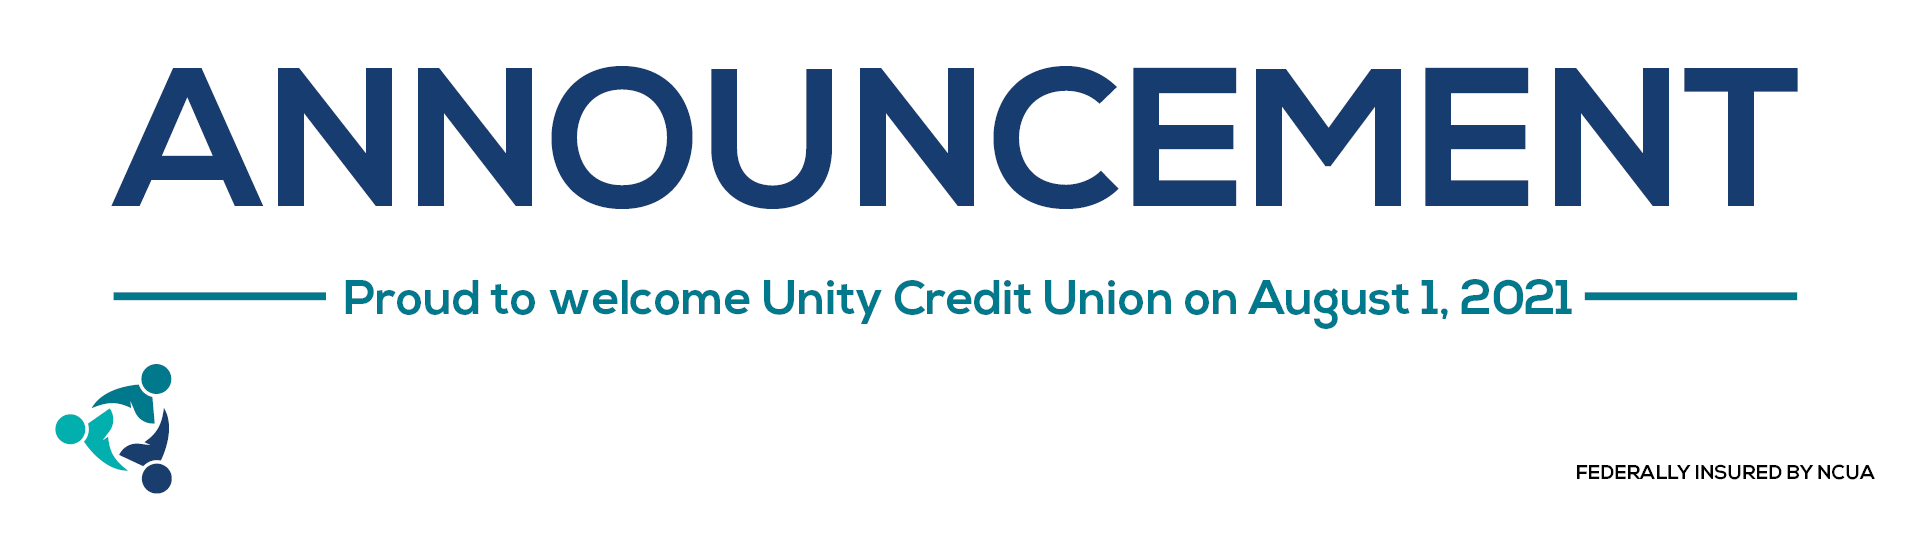 unity credit union springdale sr